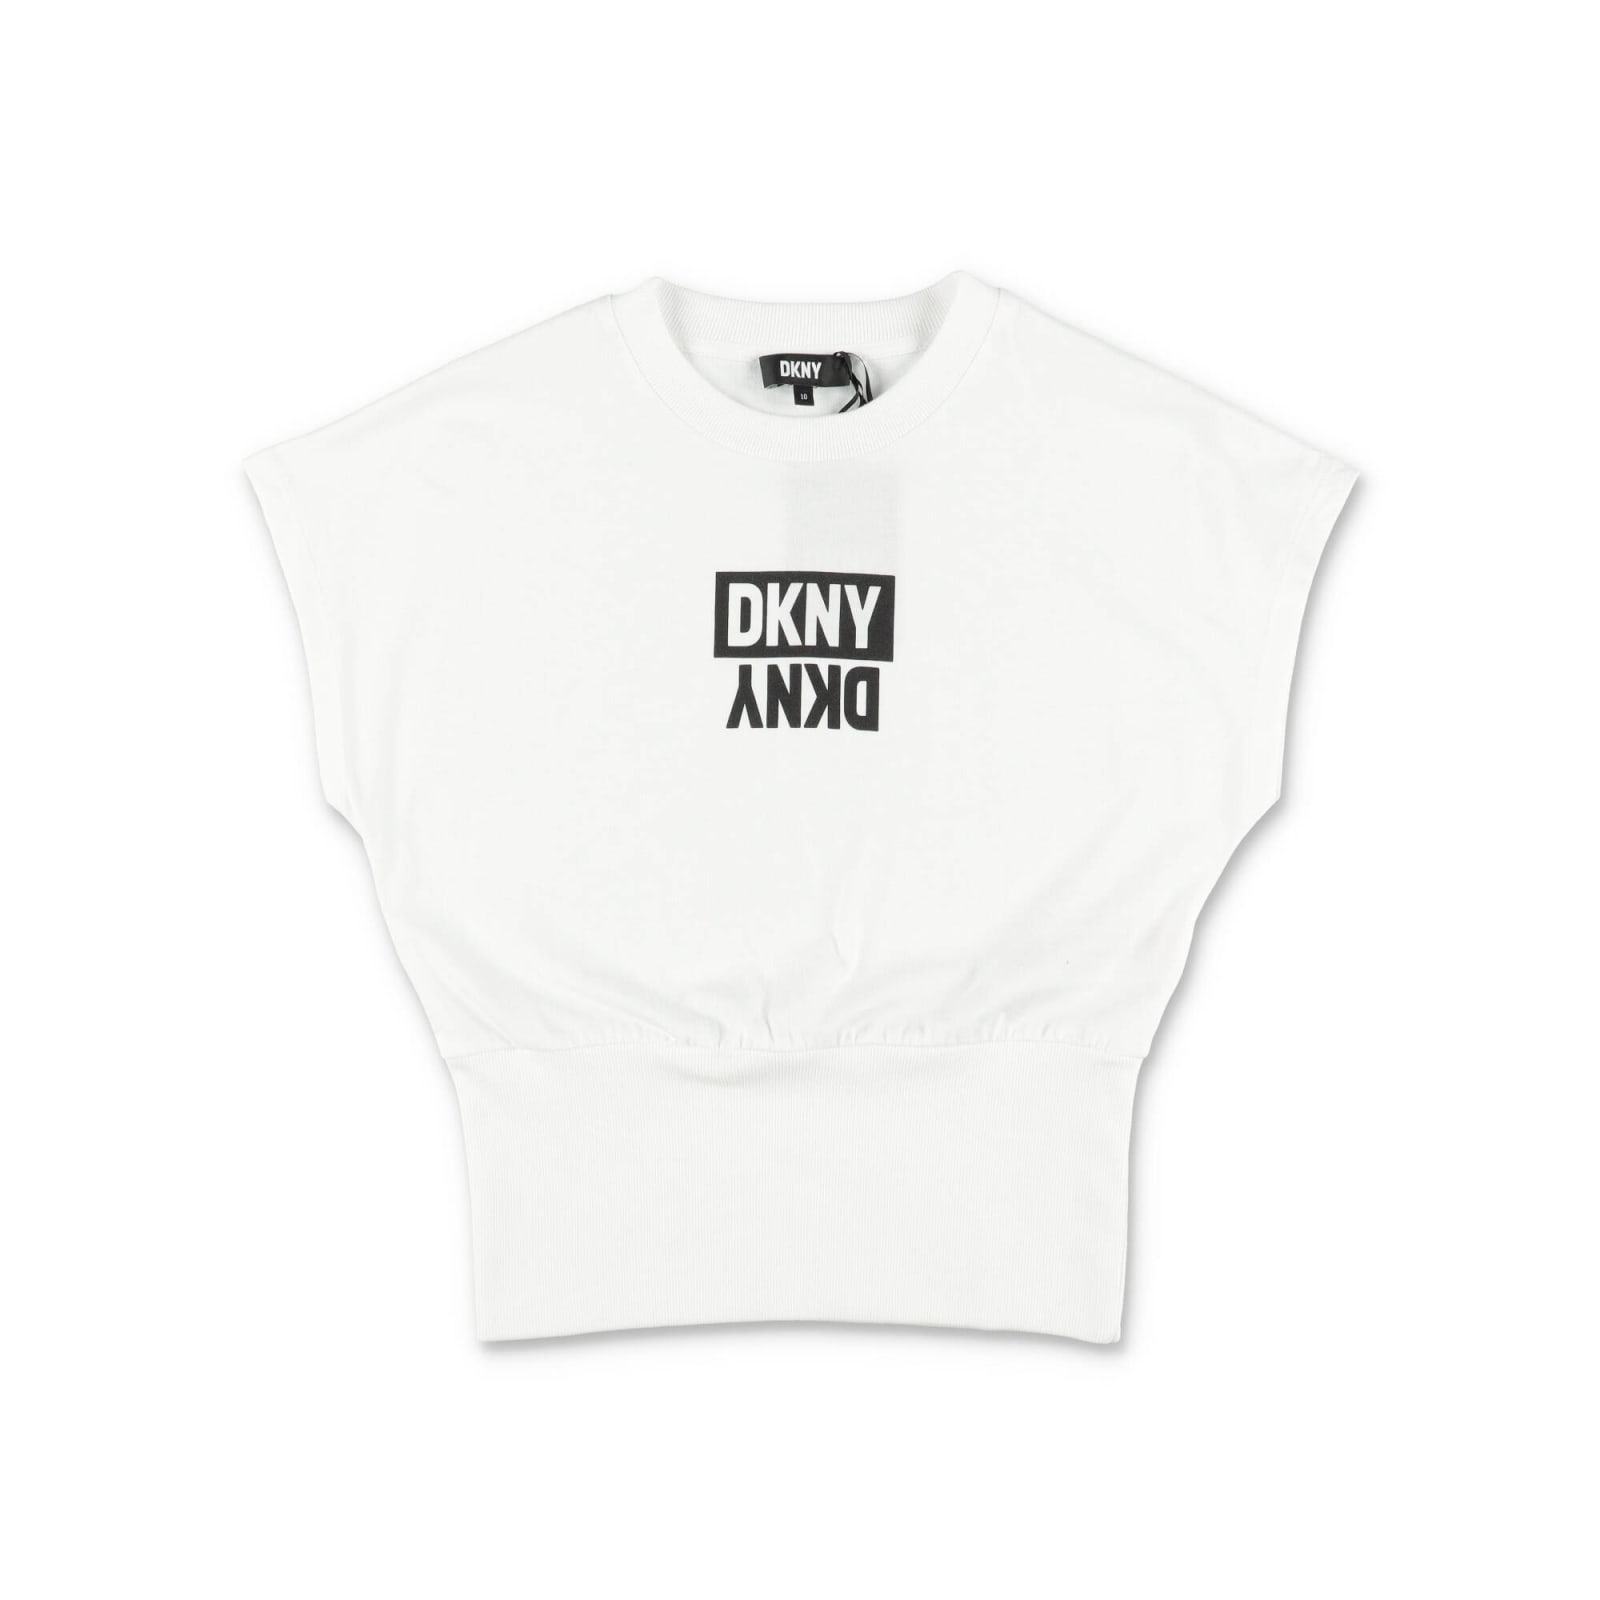 Dkny T-shirt Bianca In Jersey Di Cotone Bambina